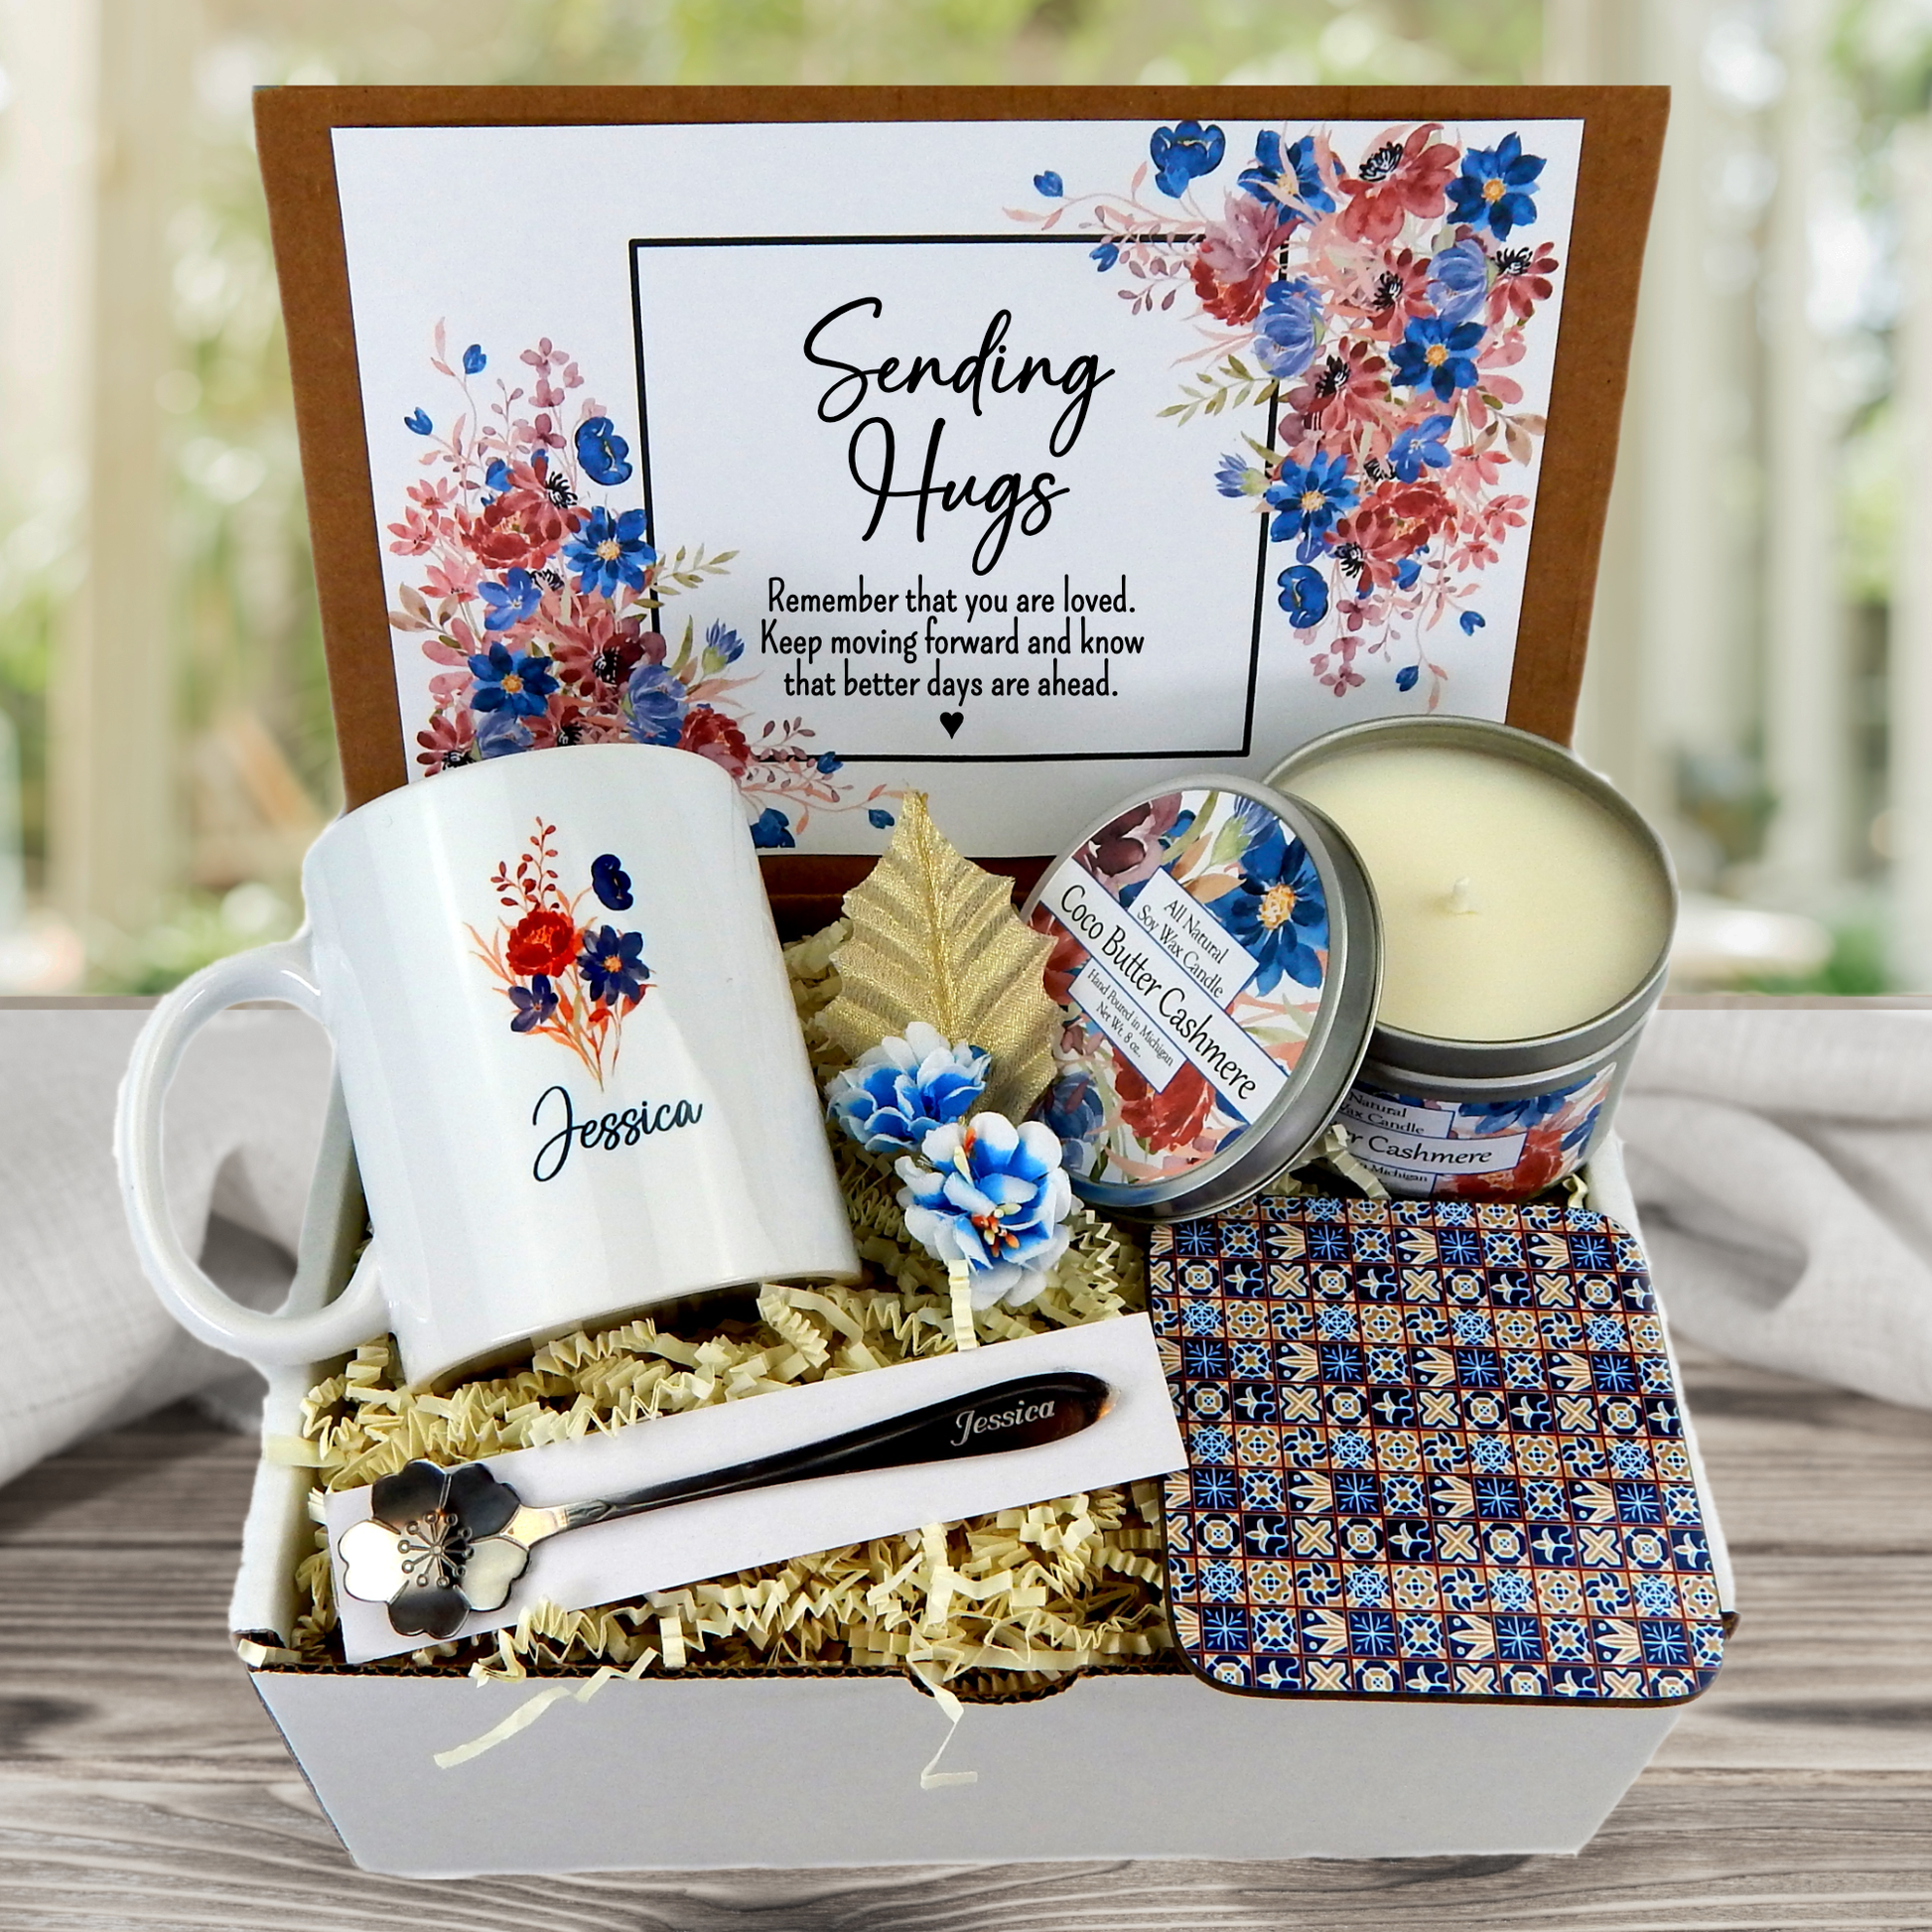 Share your affection with a gift basket and custom mug for sending hugs